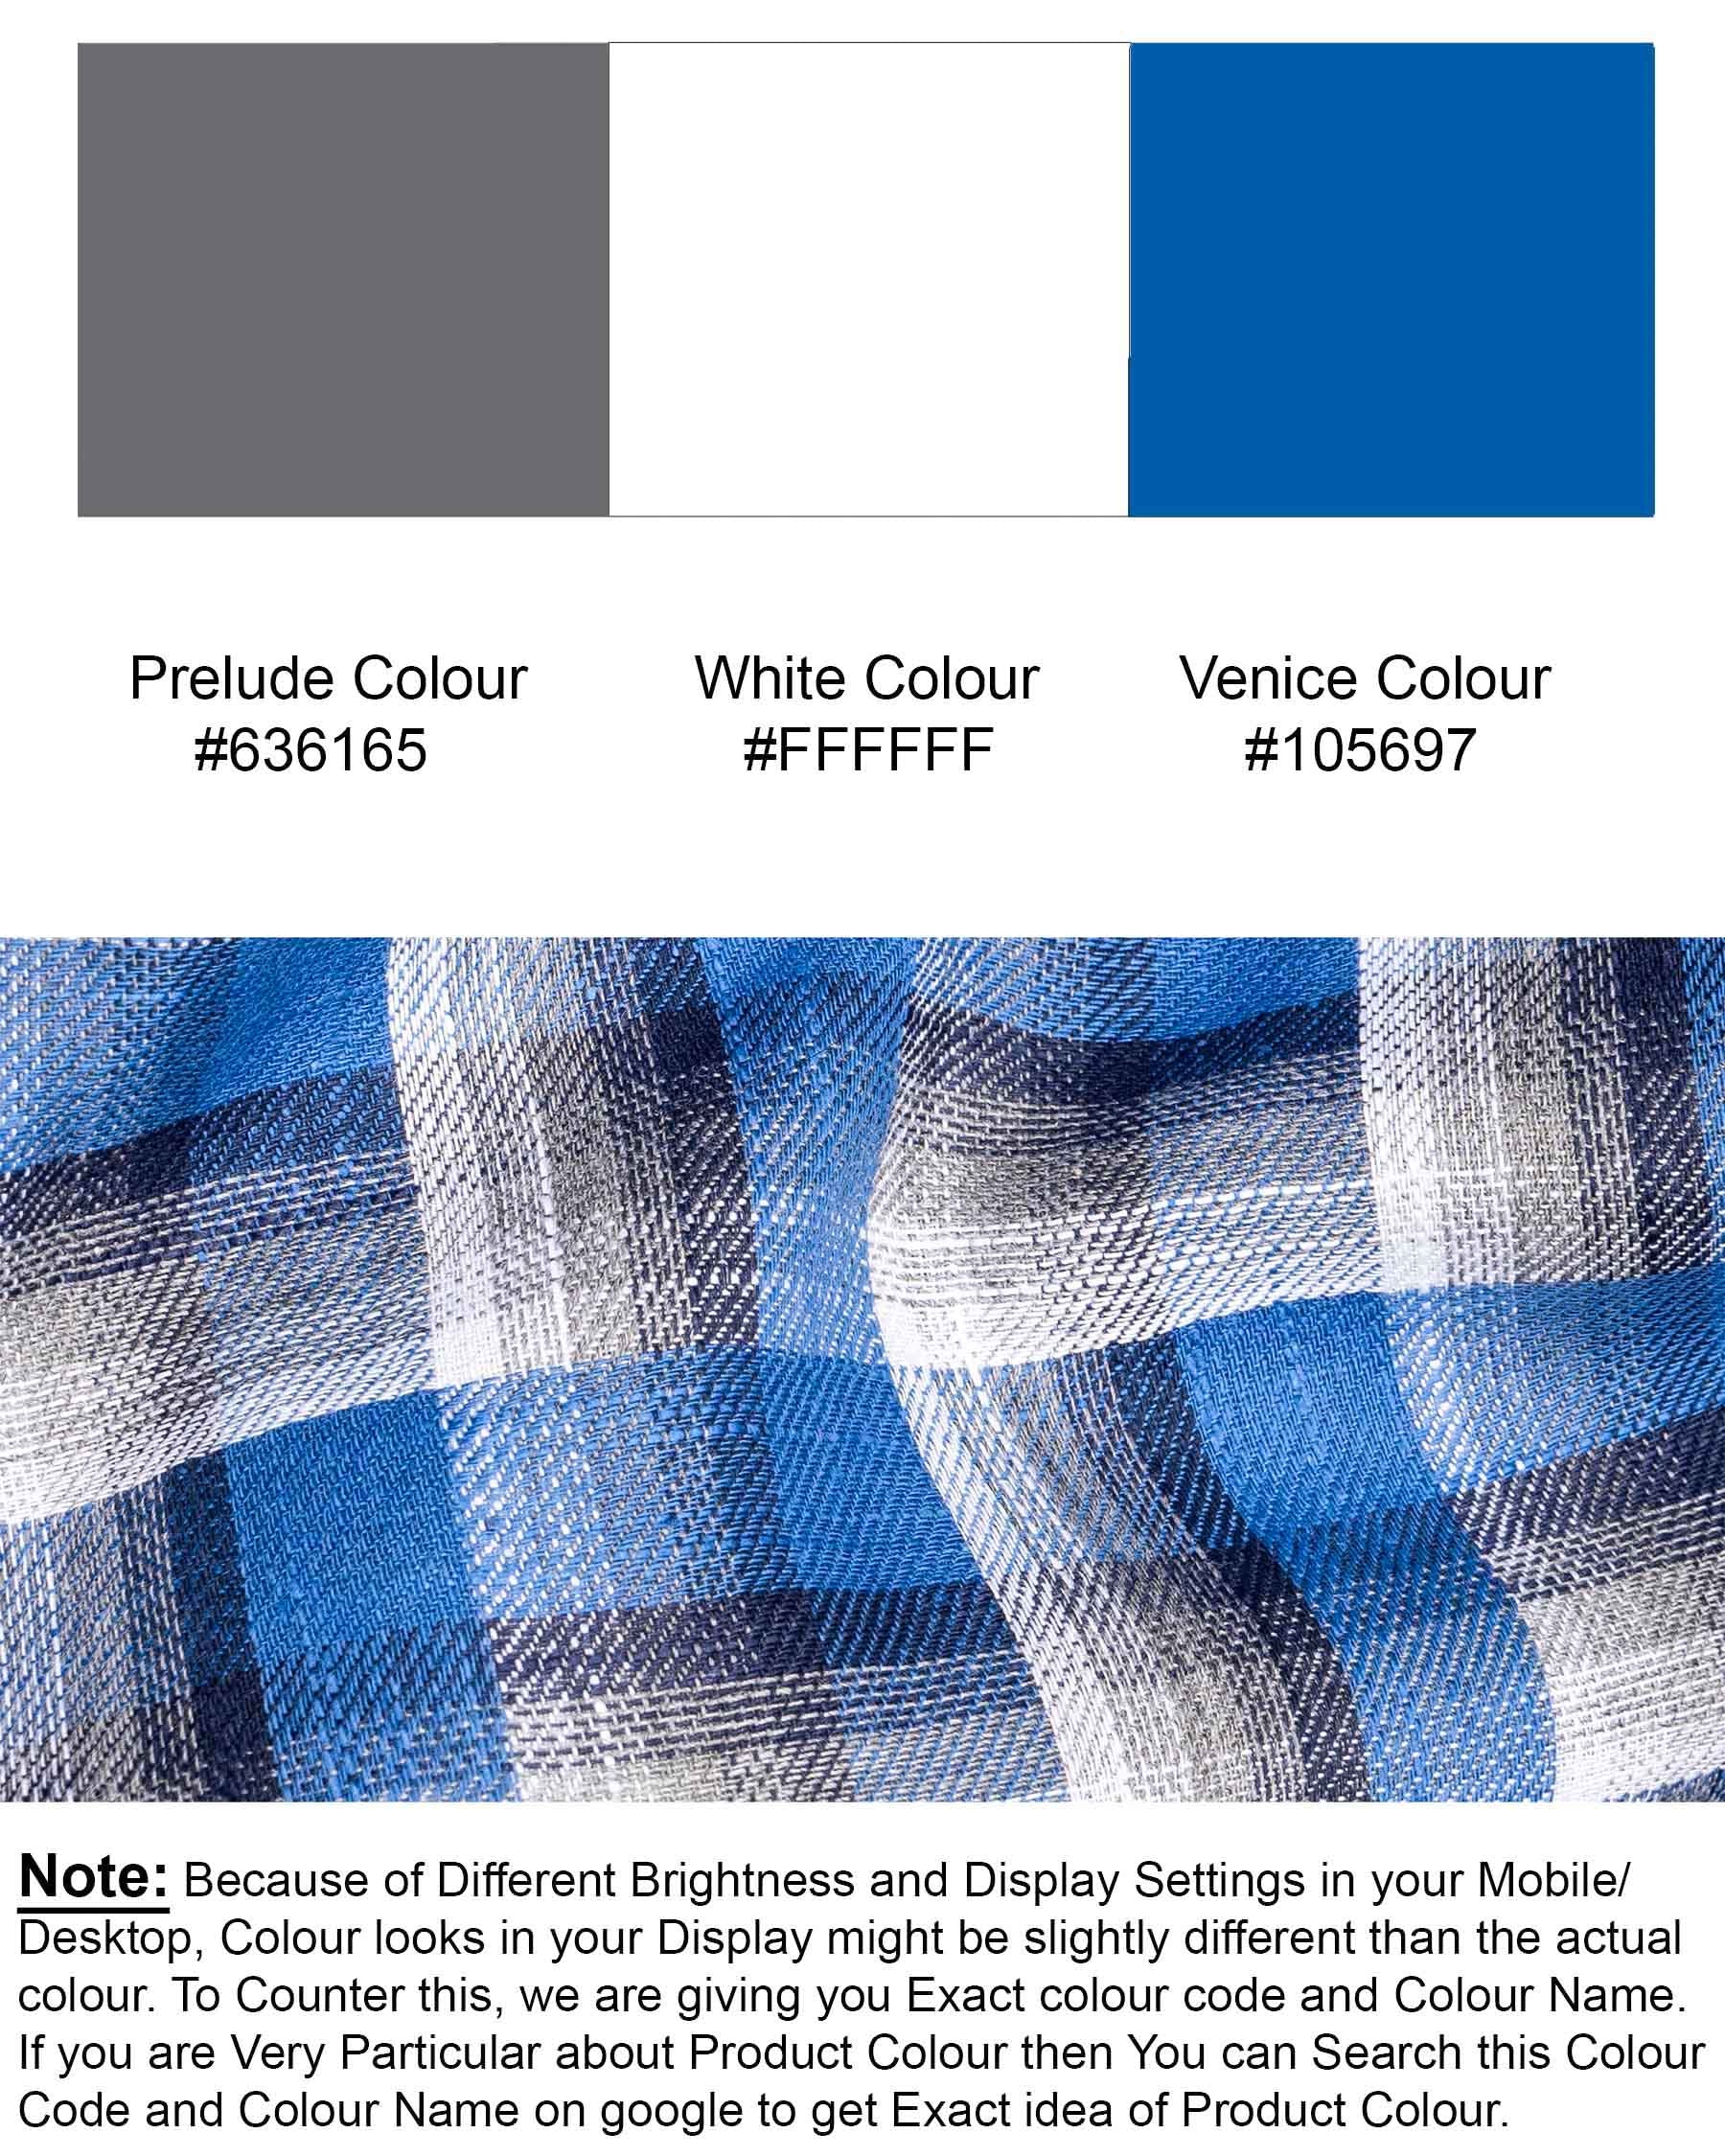 White and Venice Blue Twill Textured Premium Cotton Shirt 6439-CLOTH-P-38, 6439-CLOTH-P-H-38, 6439-CLOTH-P-39, 6439-CLOTH-P-H-39, 6439-CLOTH-P-40, 6439- M-H-40, 6439-CLOTH-P-42, 6439-CLOTH-P-H-42, 6439-CLOTH-P-44, 6439-CLOTH-P-H-44, 6439-CLOTH-P-46, 6439-CLOTH-P-H-46, 6439-CLOTH-P-48, 6439-CLOTH-P-H-48, 6439-CLOTH-P-50, 6439-CLOTH-P-H-50, 6439-CLOTH-P-52, 6439-CLOTH-P-H-52